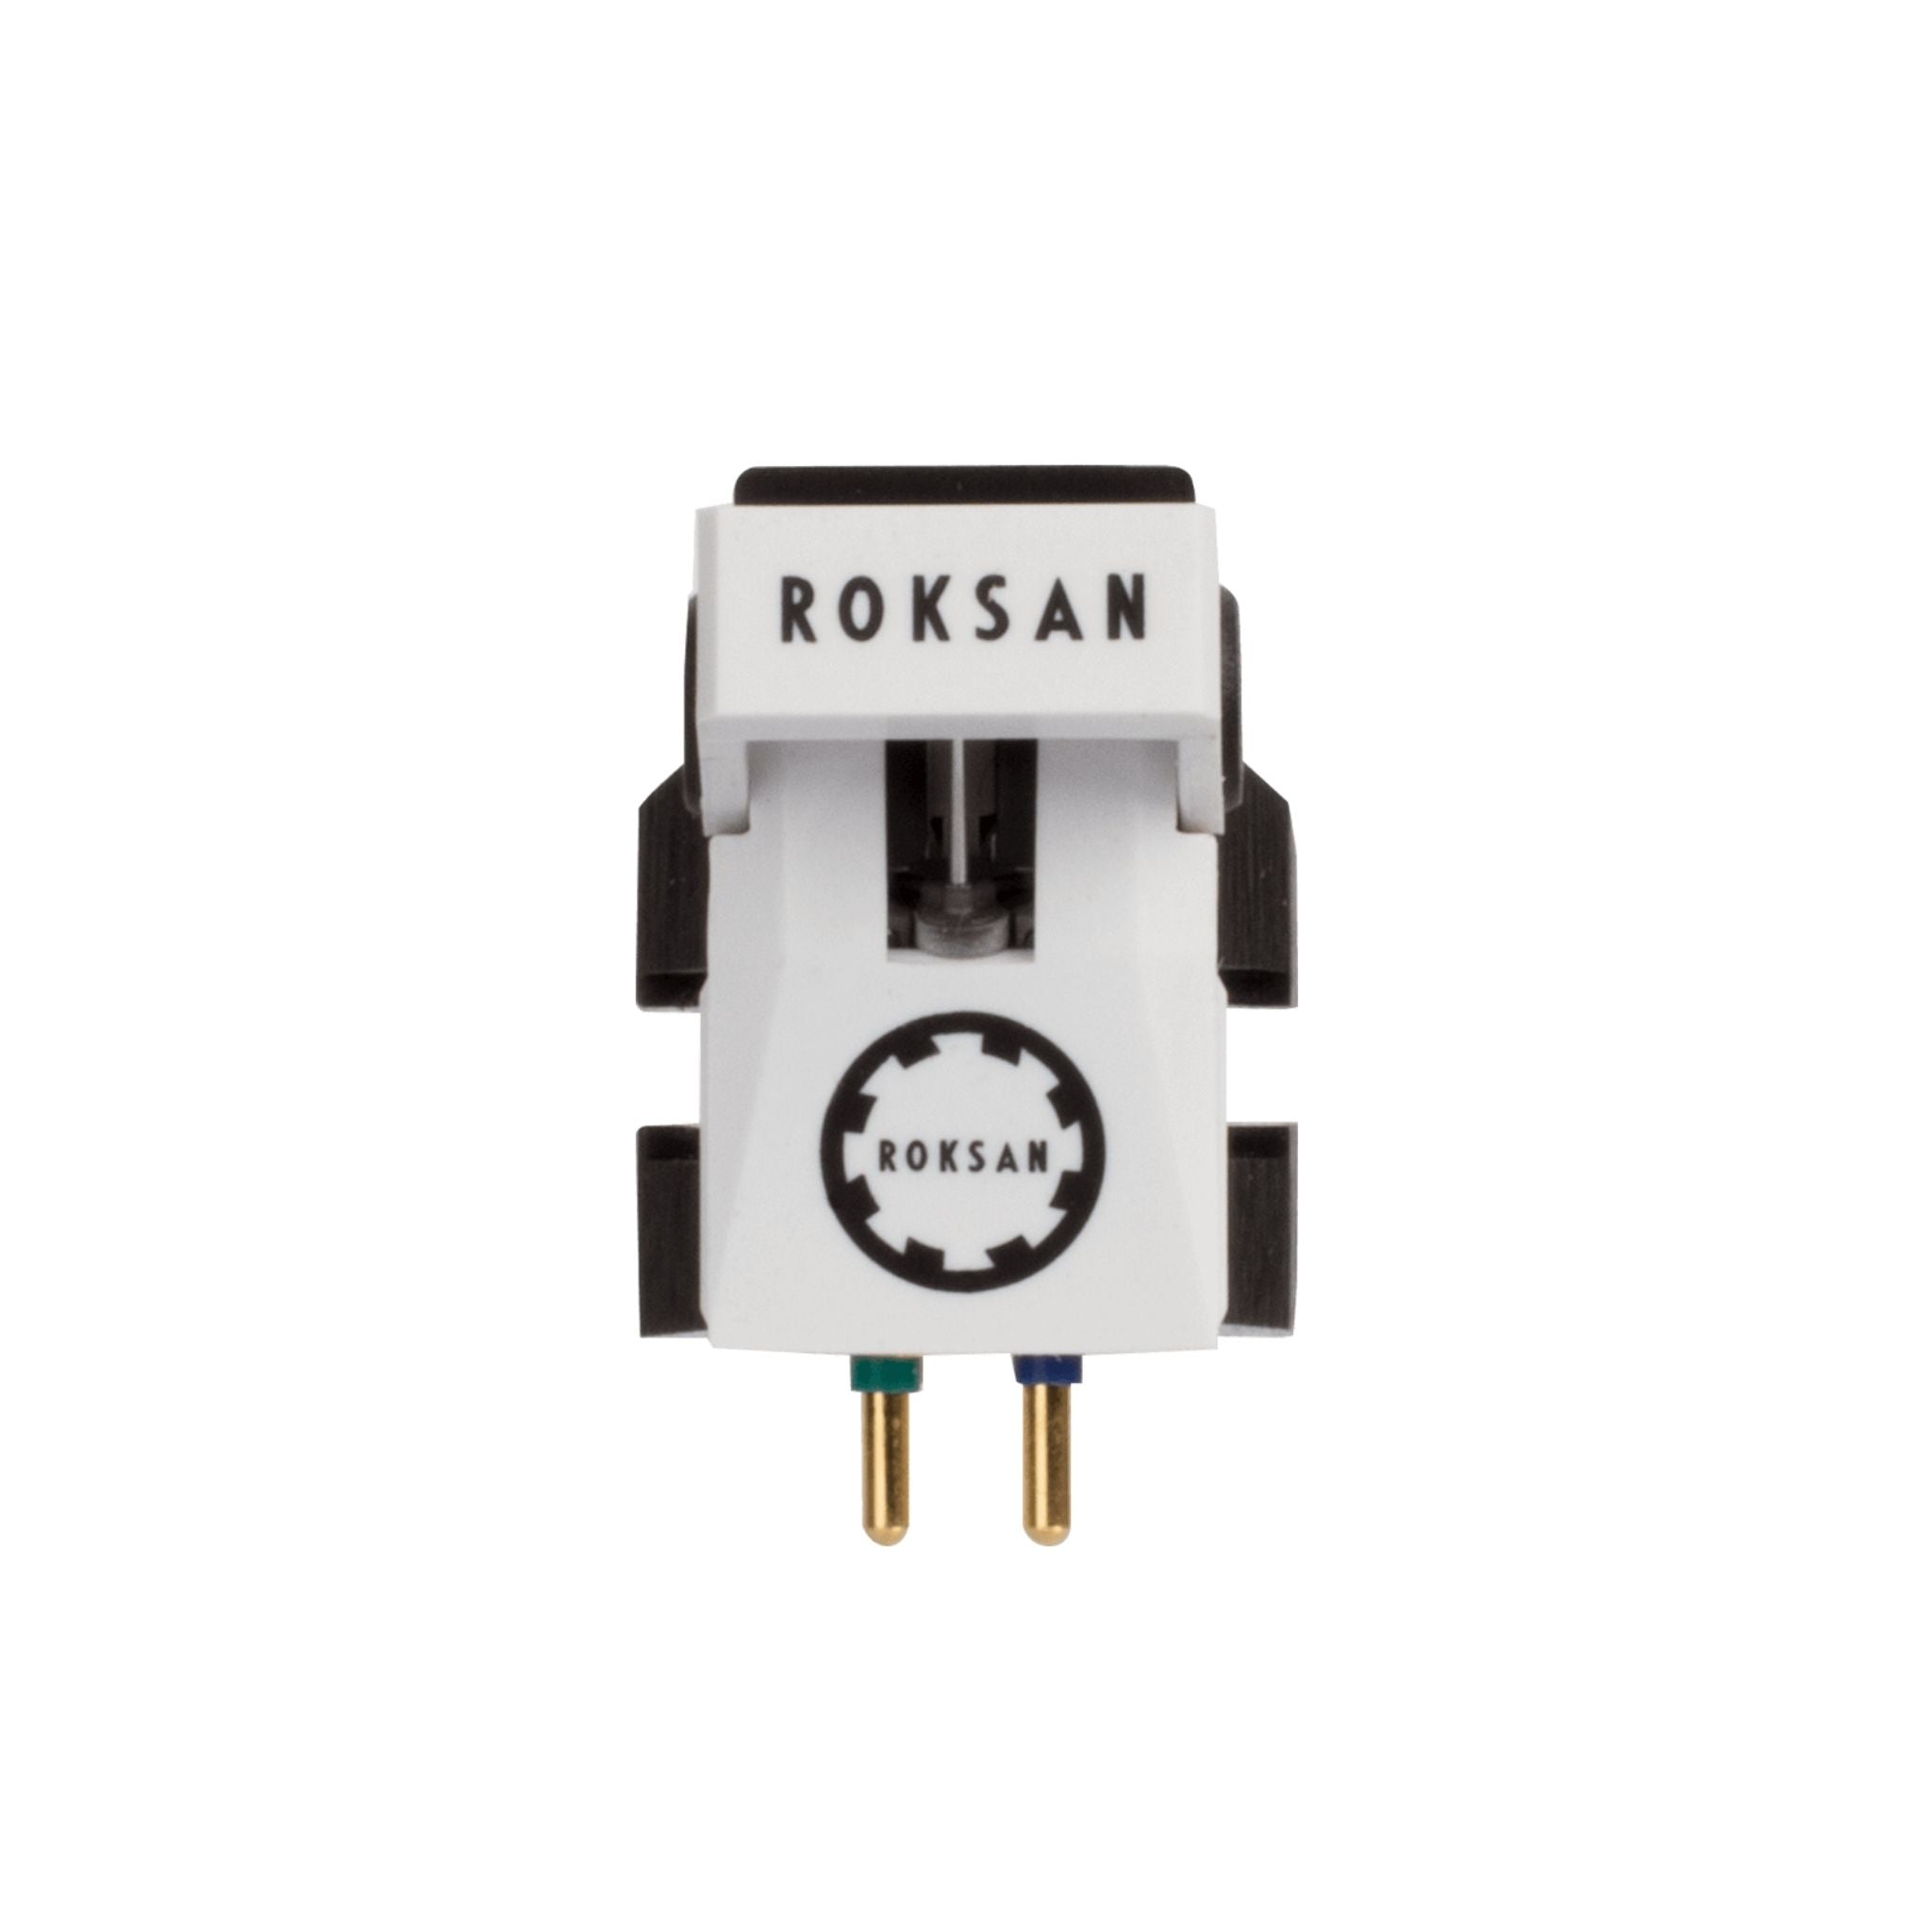 Roksan Corus2 - Turntable Cartridge, Roksan, Turntable Cartridge - AVStore.in